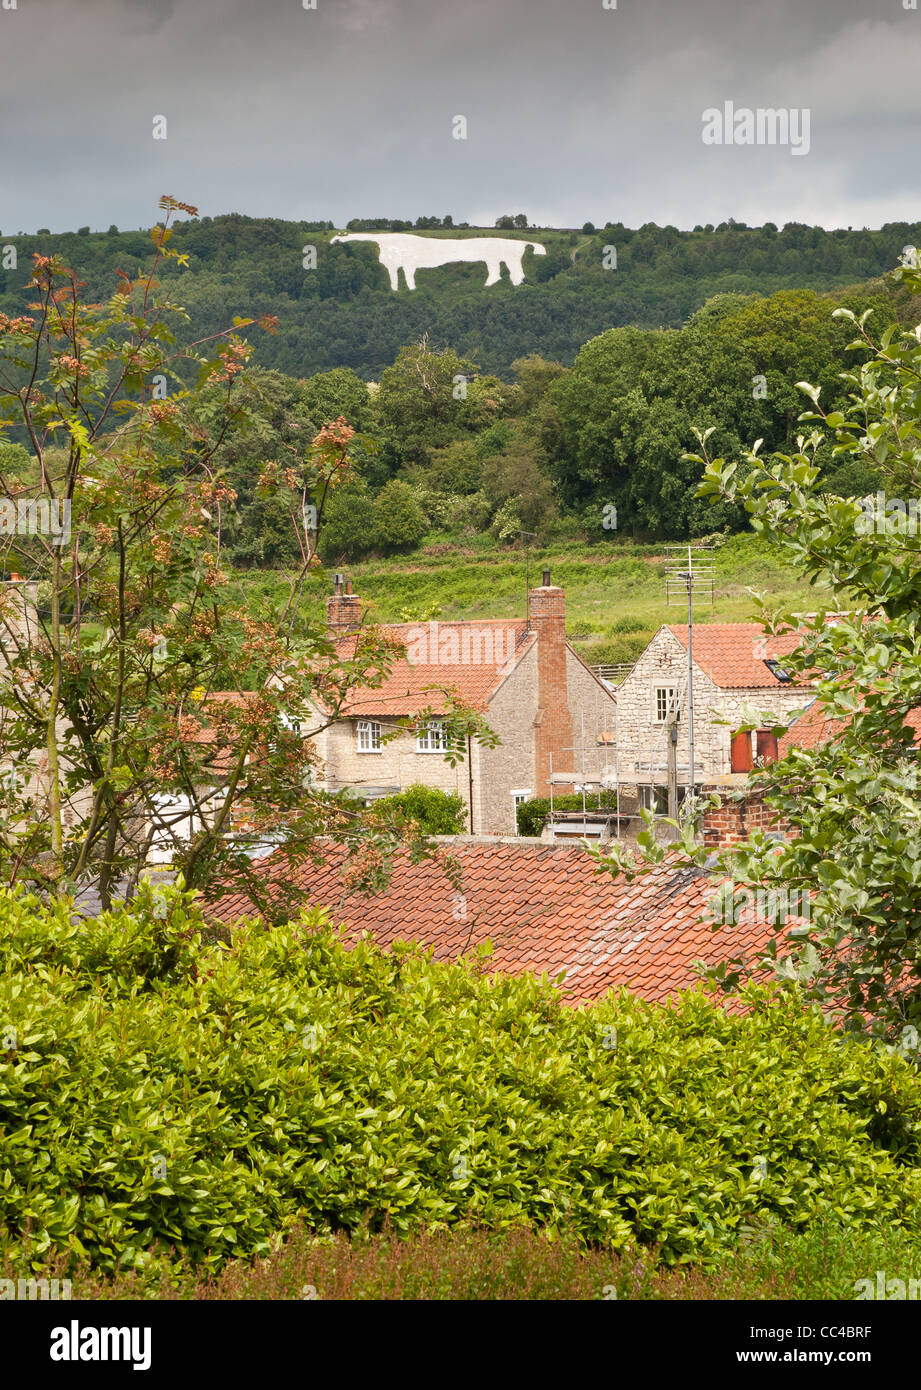 The White Horse at Kilburn Yorkshire England UK Stock Photo